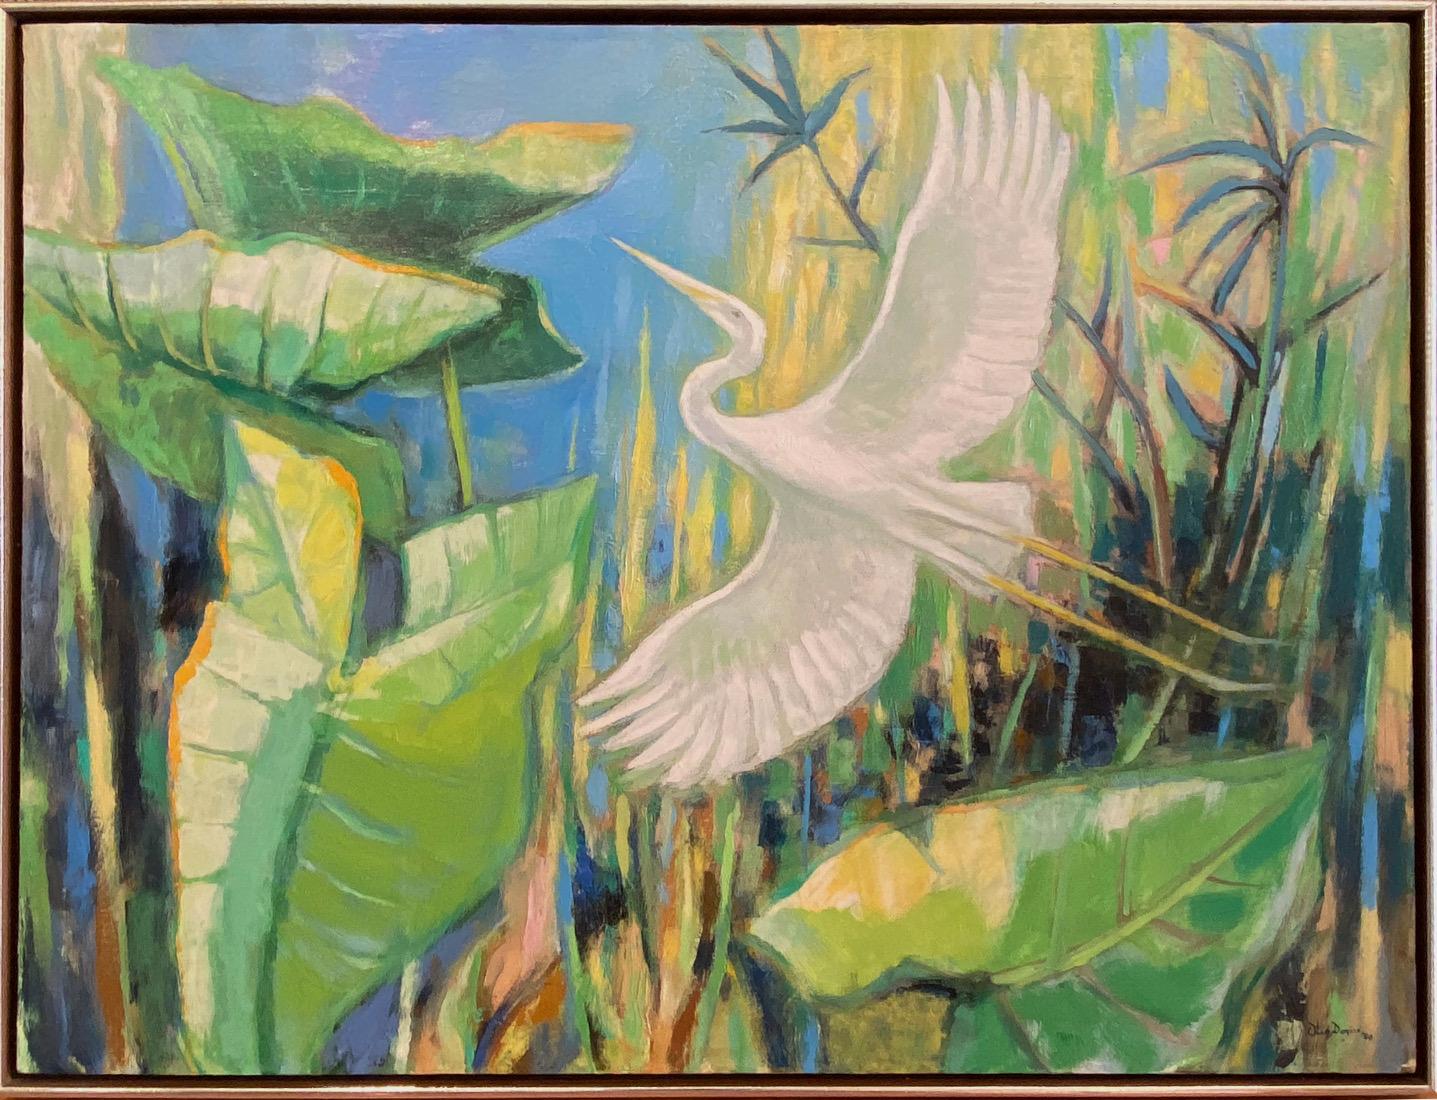 Otis Dozier Landscape Painting - "IN FLIGHT" OTIS DOZIER MODERN CRAIN IN FLIGHT TEXAS ARTIST